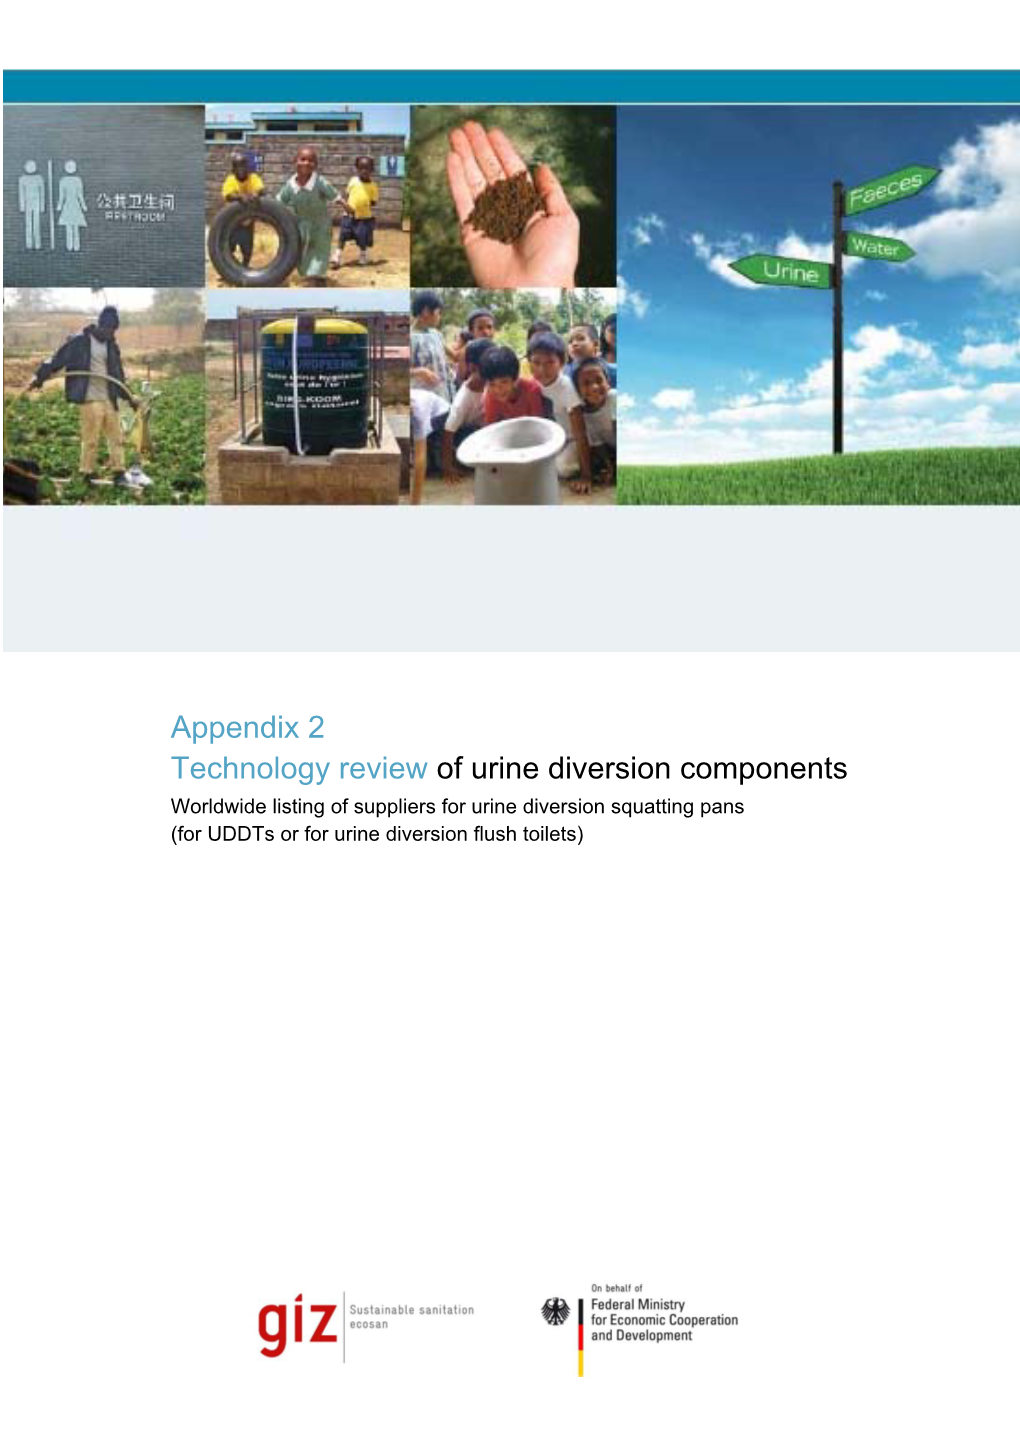 Appendix 2 Technology Review of Urine Diversion Components